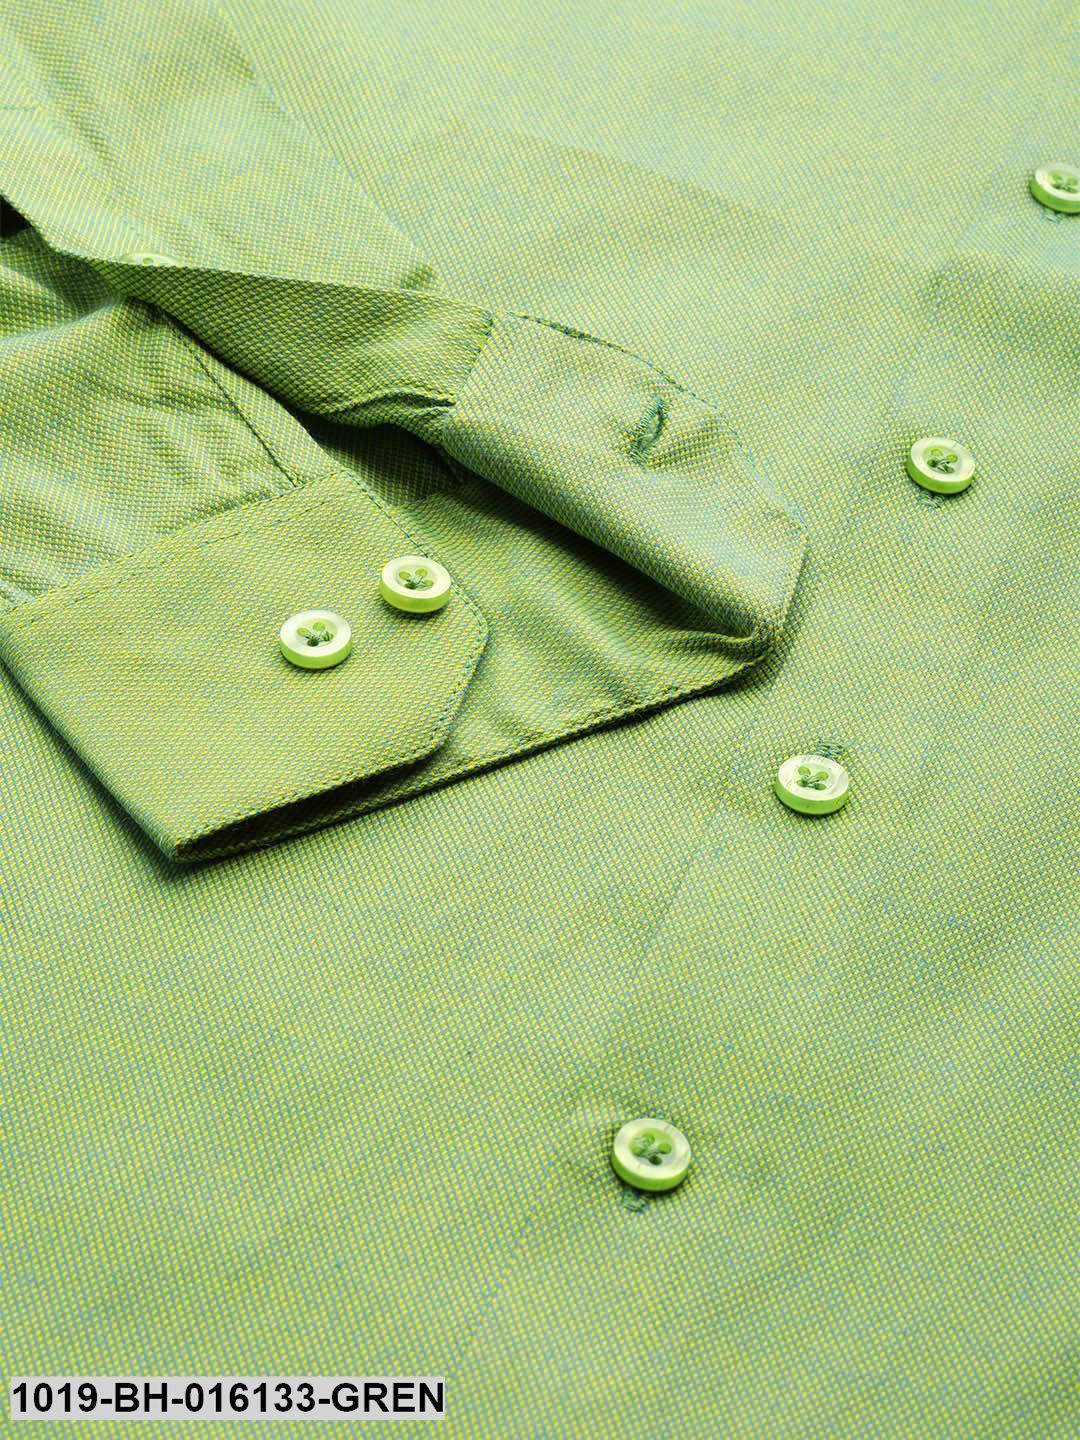 Men's Cotton Green Self Design Casual Shirt - Sojanya